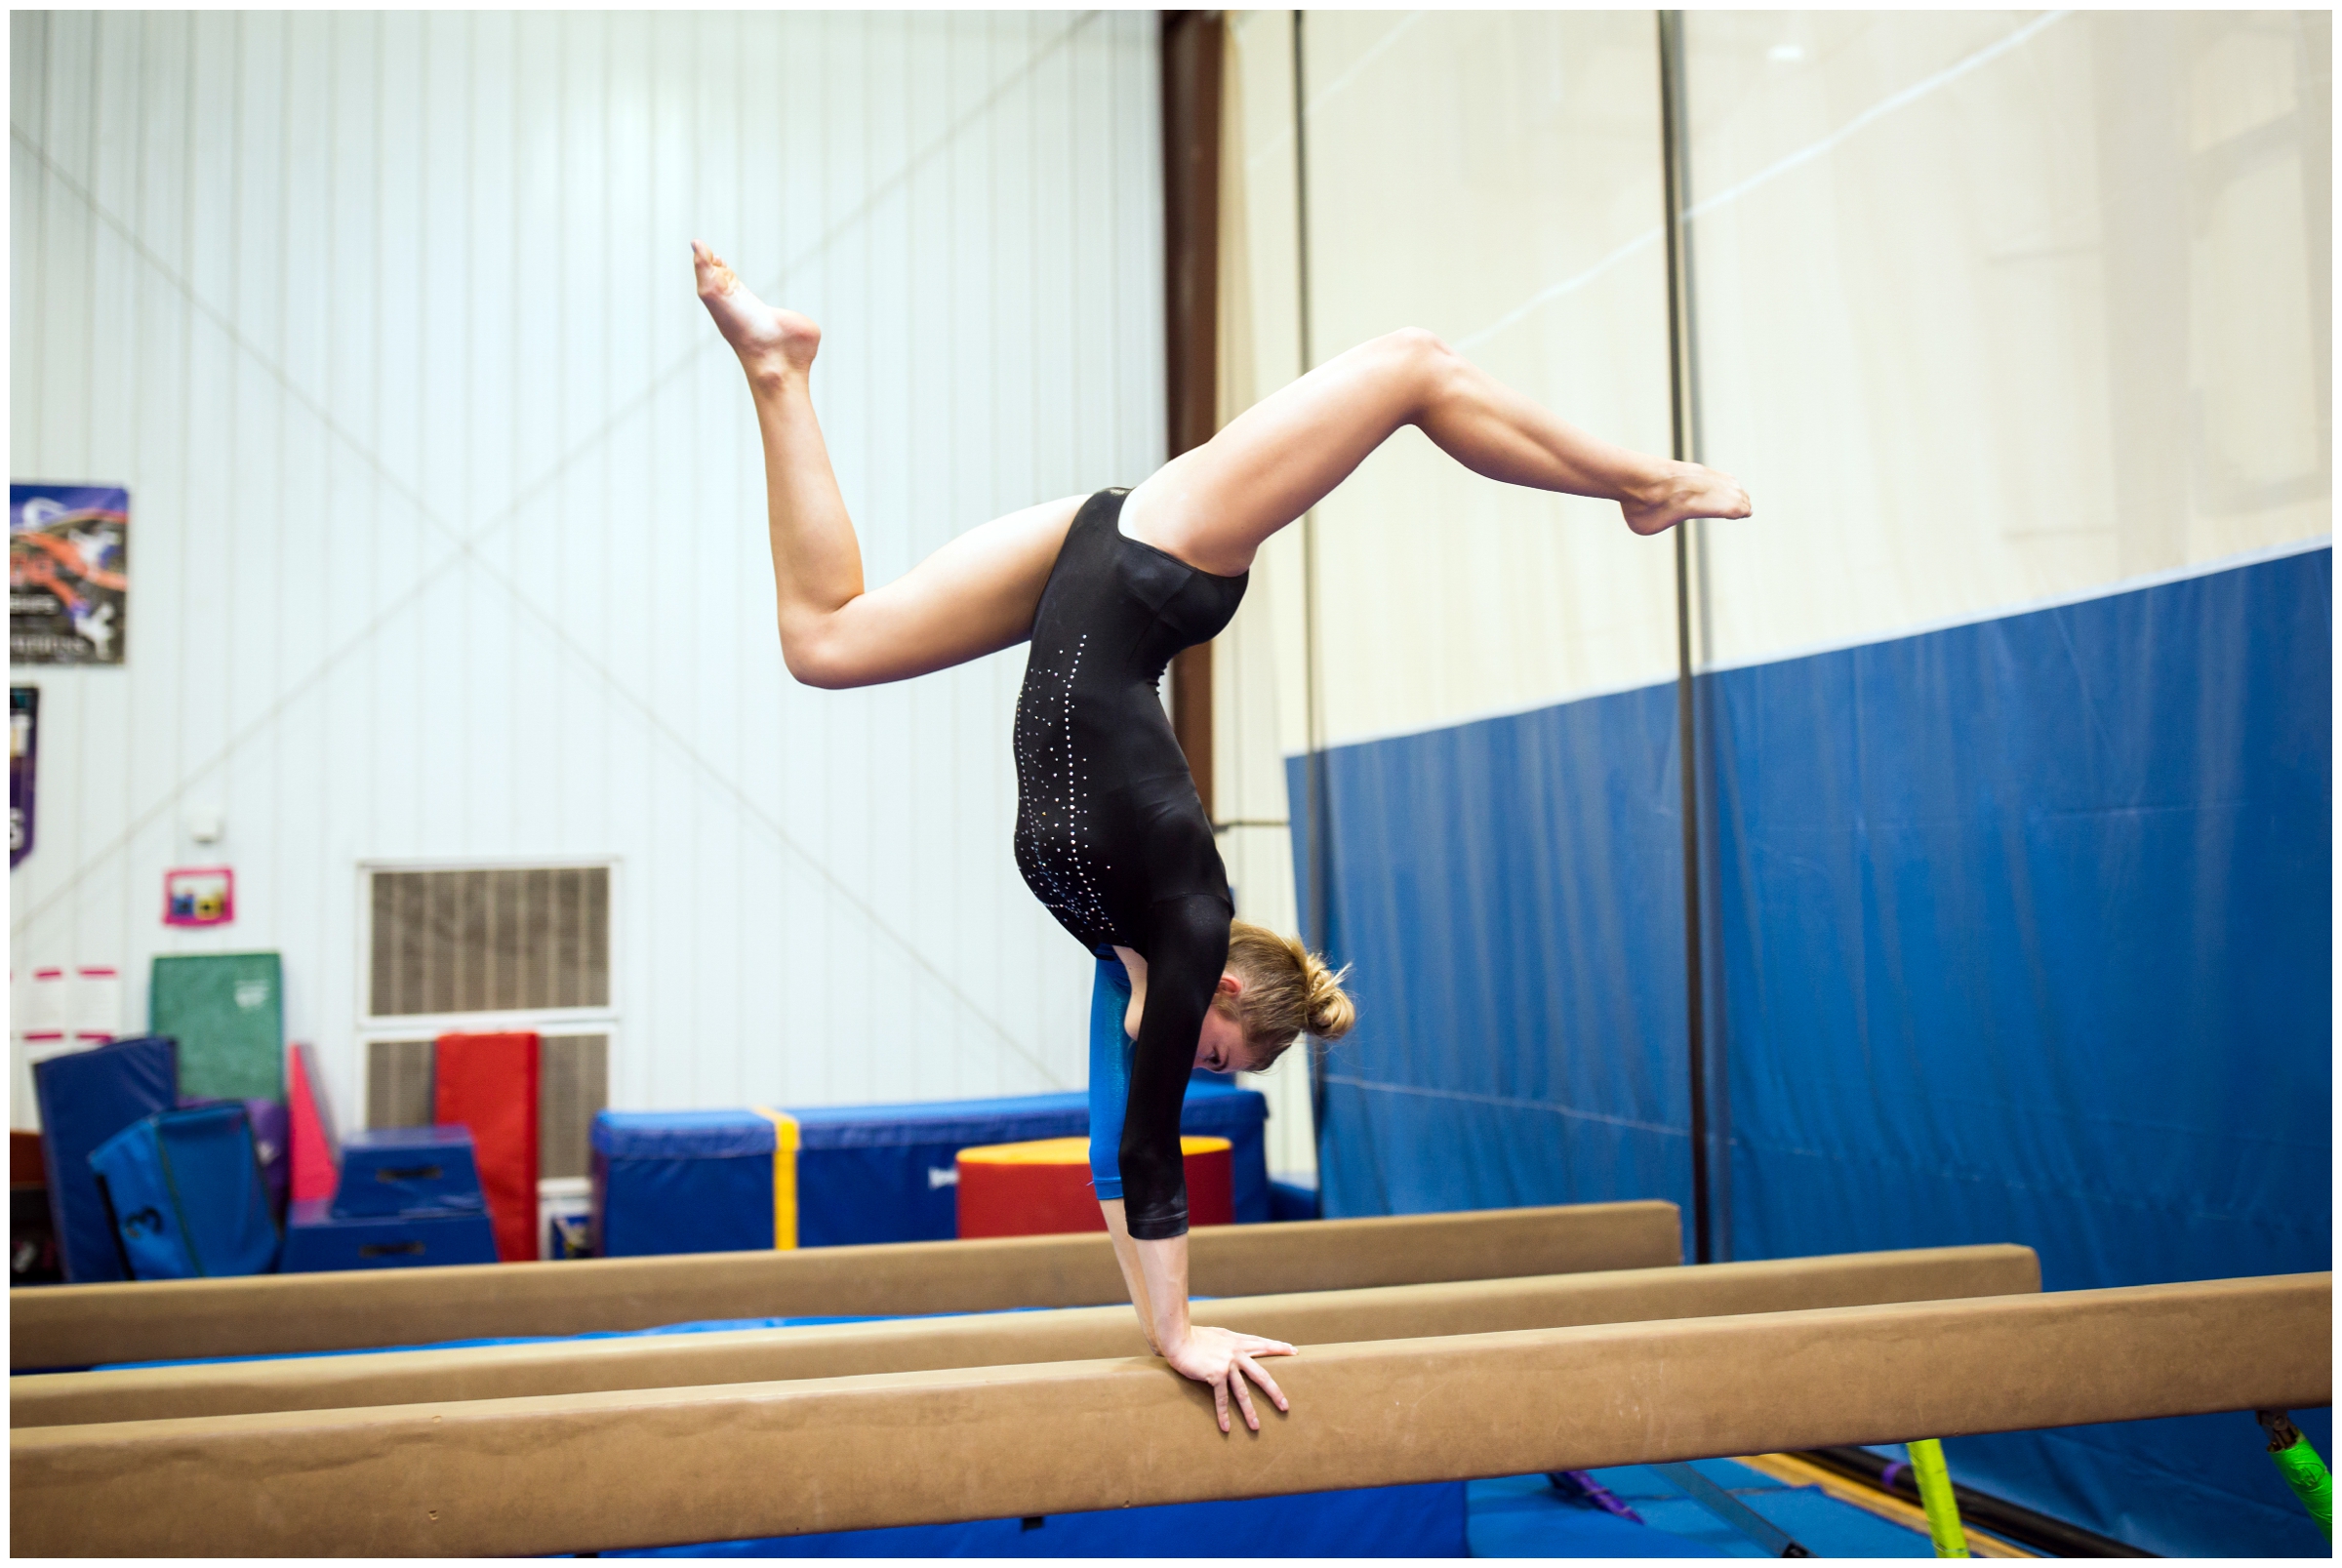 female gymnast doing handstand on balance beam during gymnastics senior photography session 